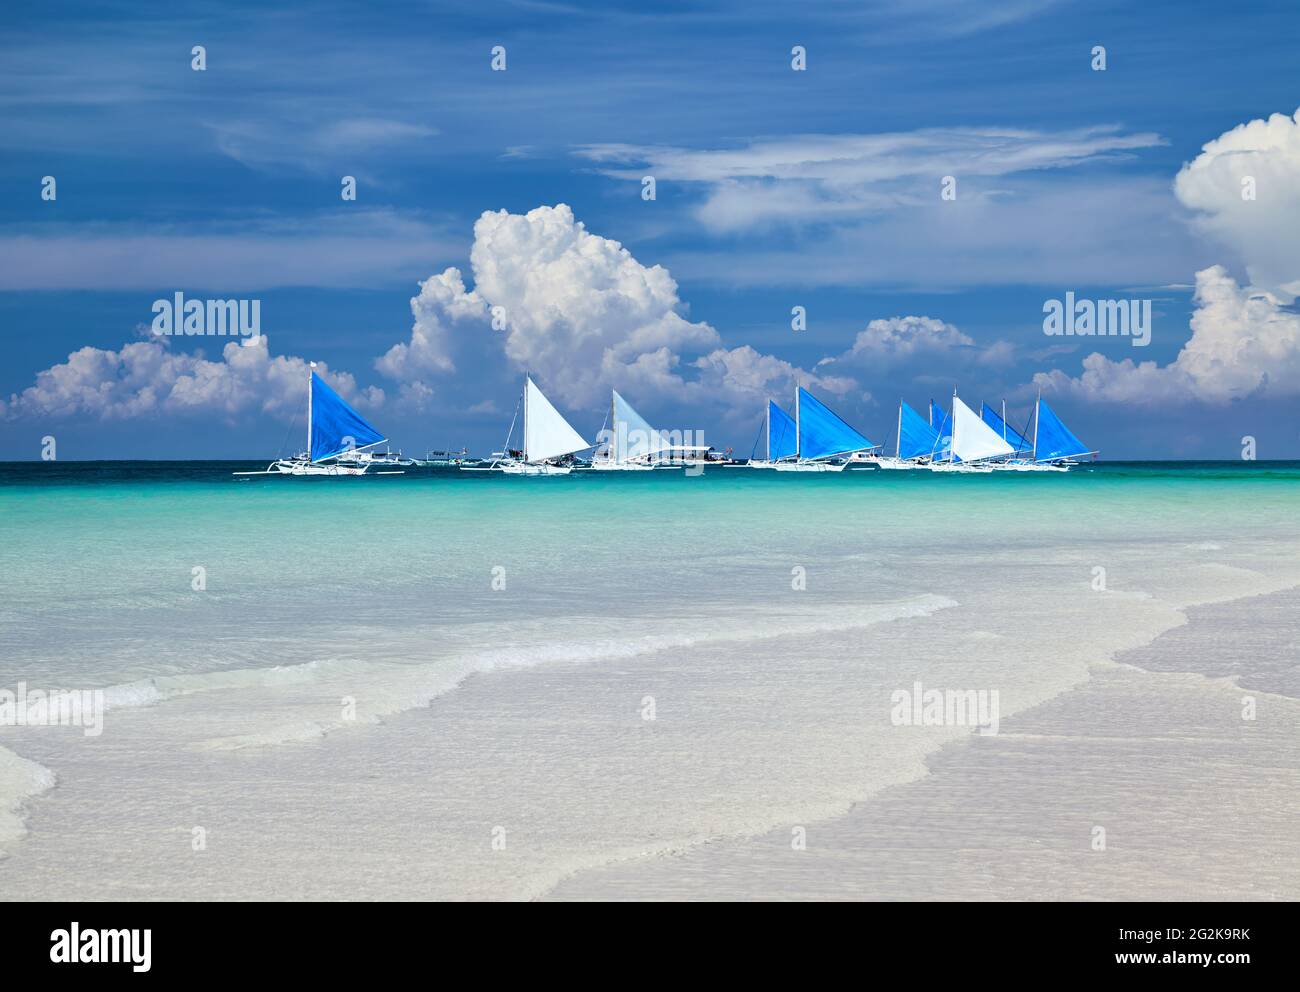 Sailboats in the sea, Tropical beach, Boracay island, Philippines Stock Photo